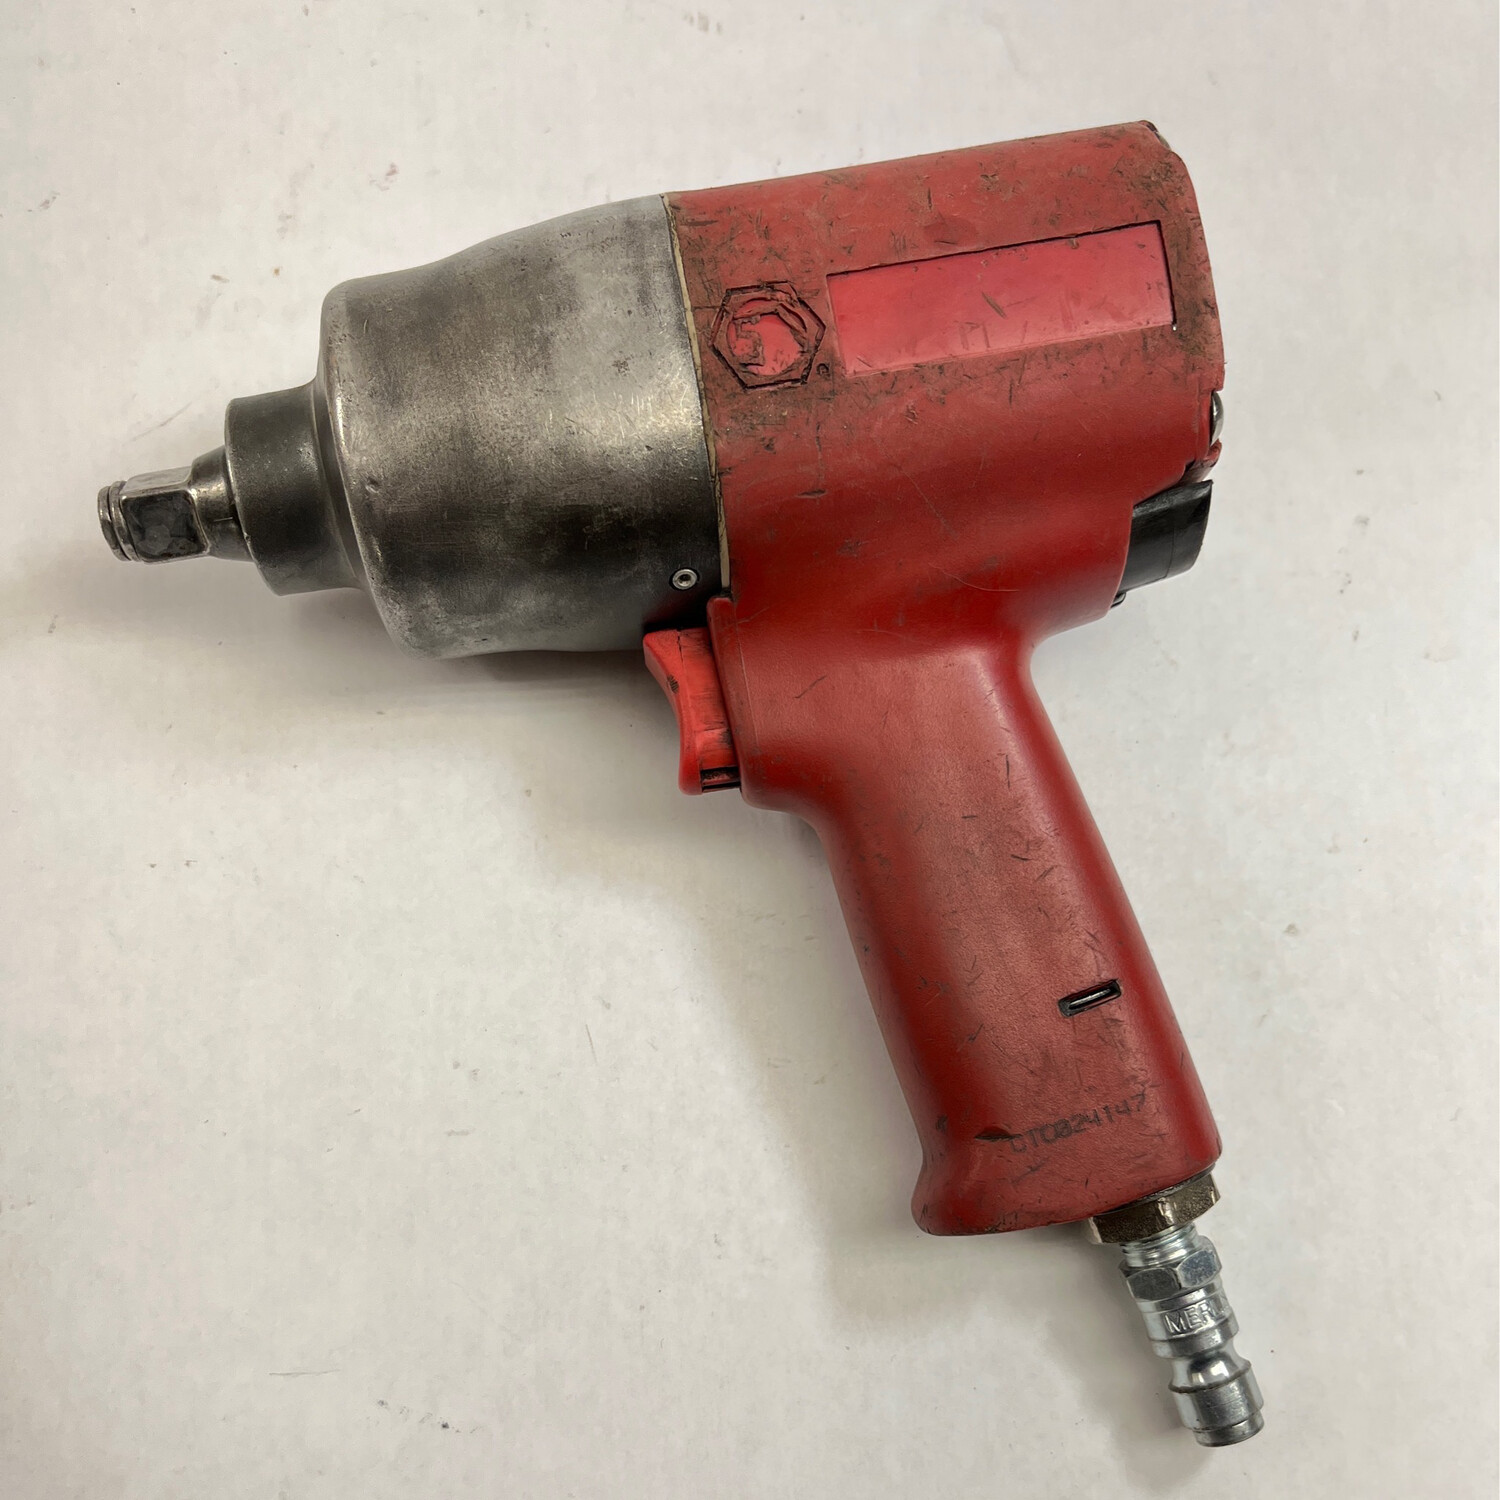 Matco Tool 1/2” Drive Air Impact Wrench